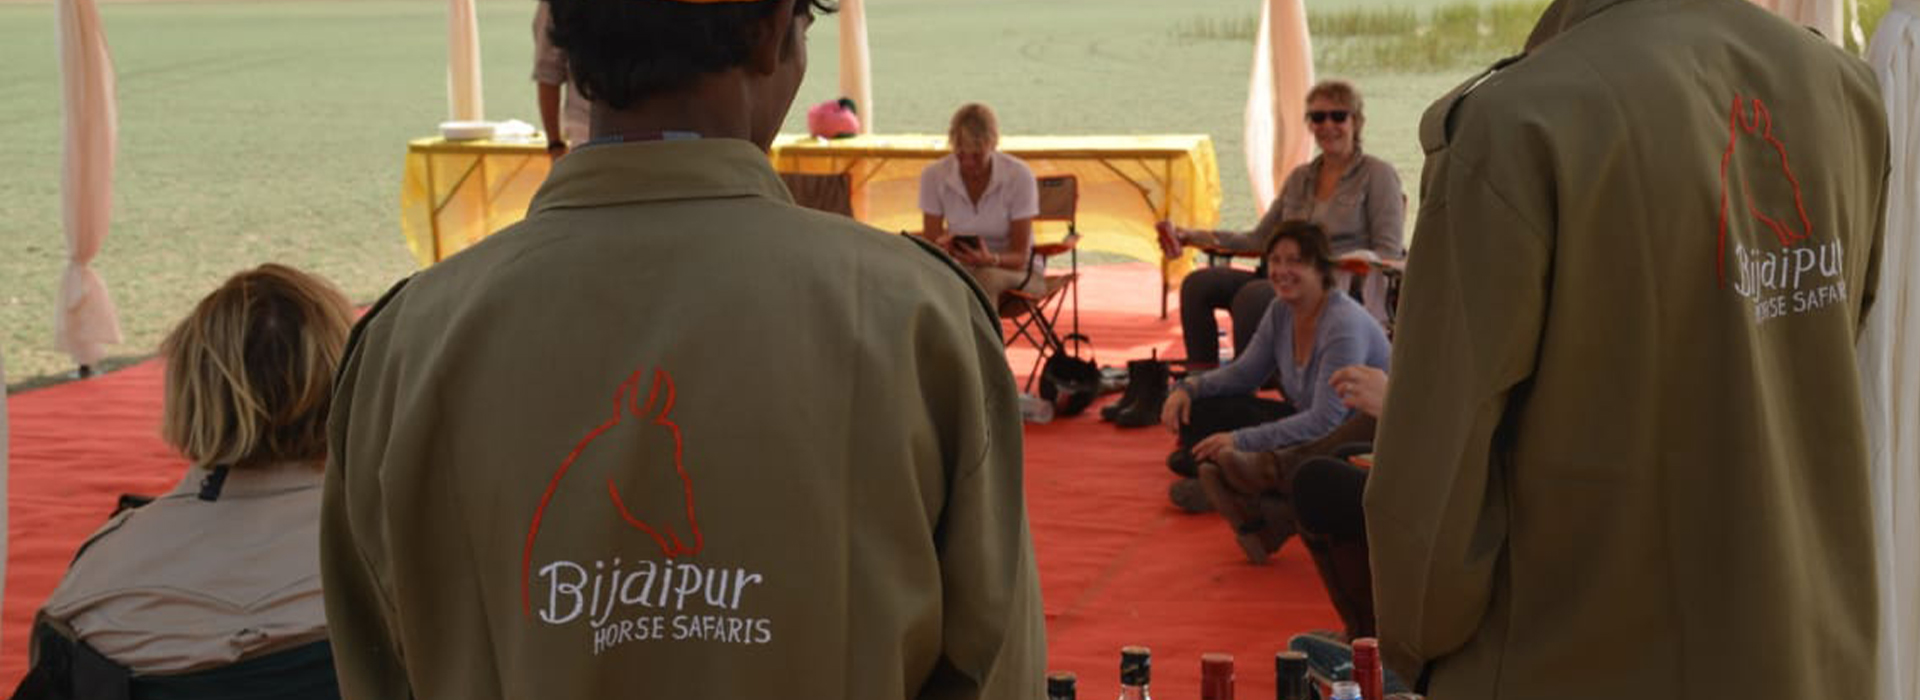 Bijaipur Horse Safaris